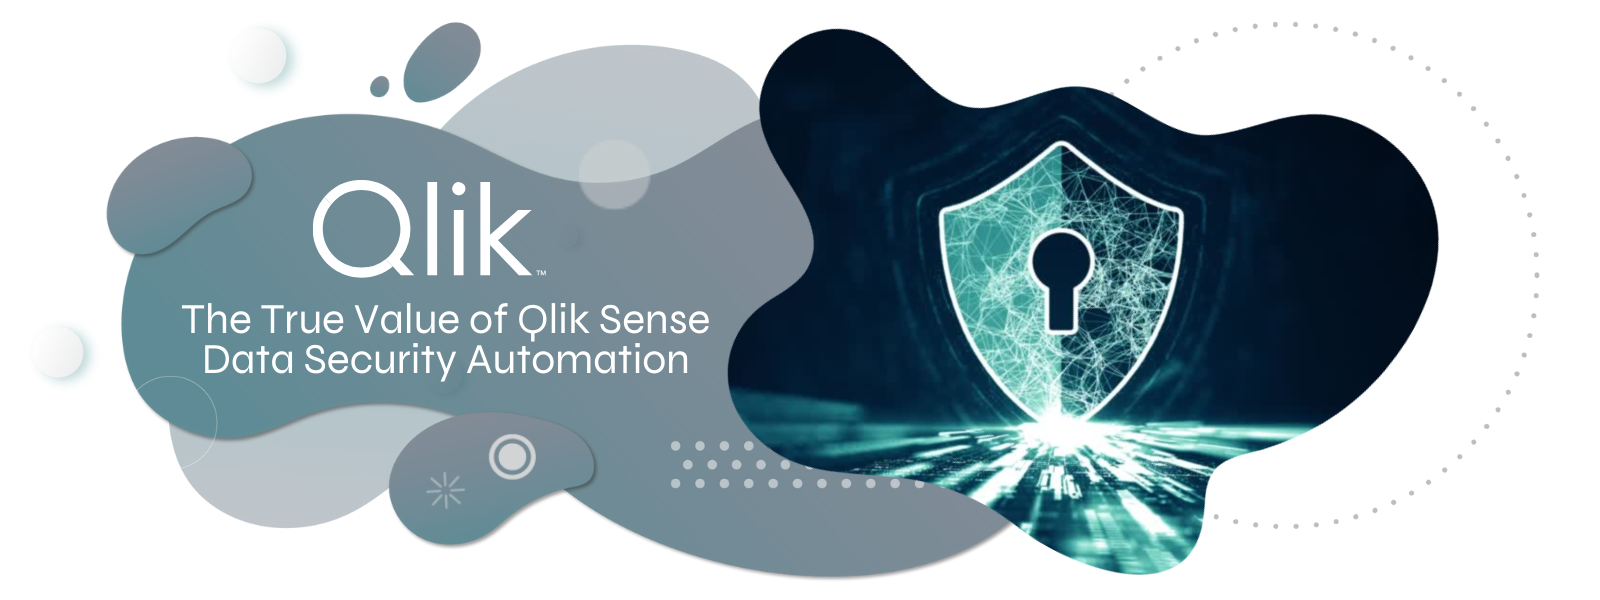 Qlik The True Value of Qlik Sense Data Security Automation